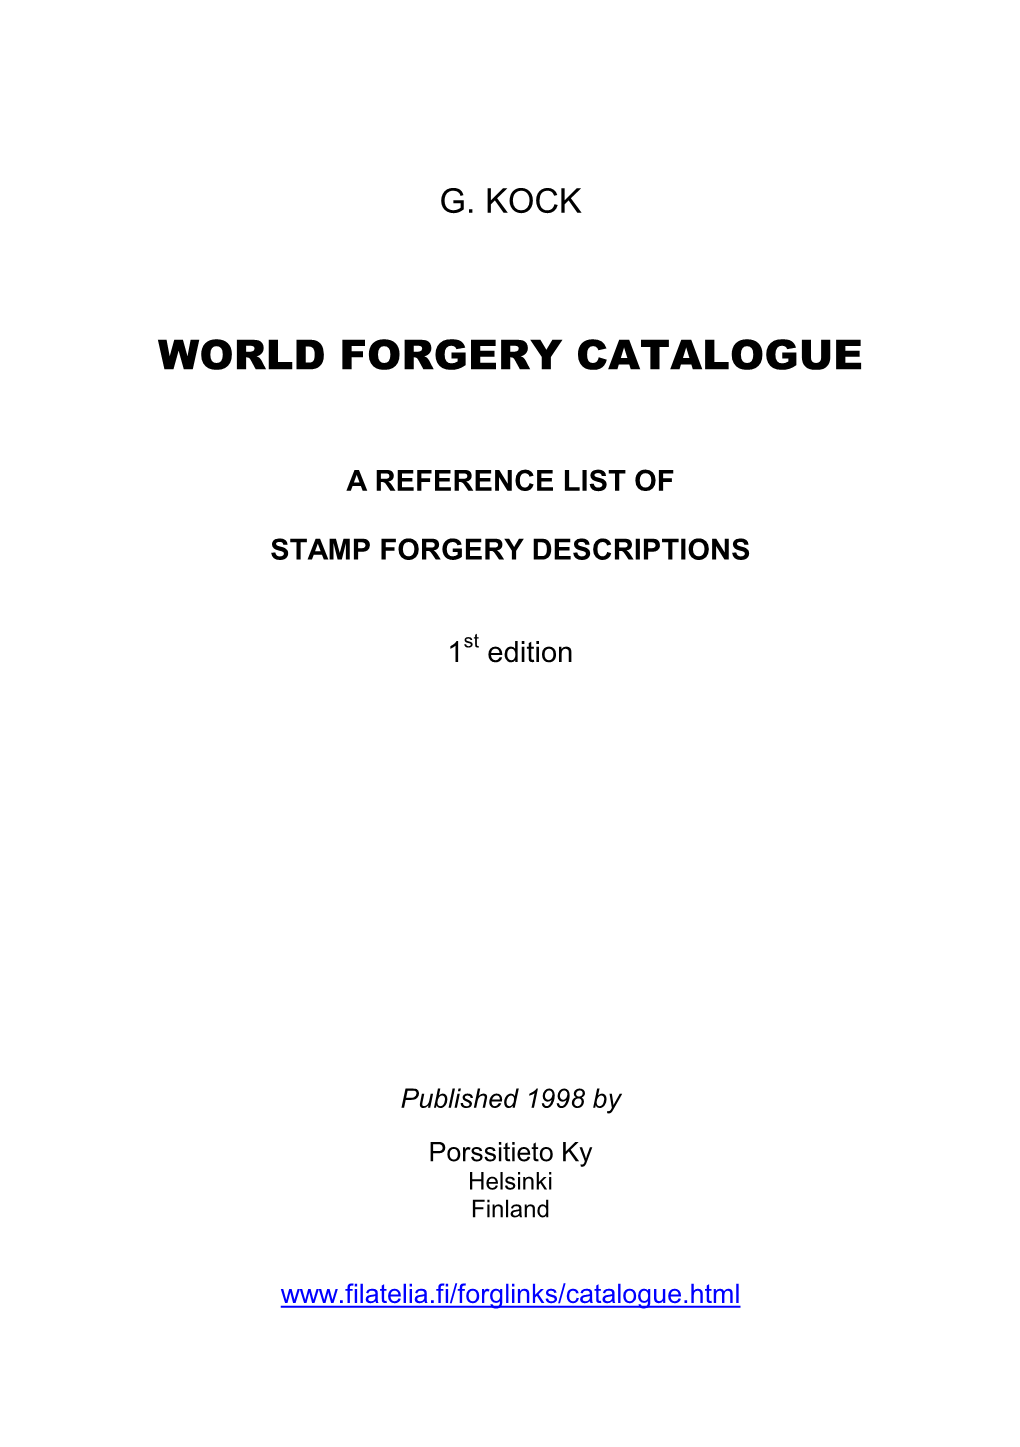 World Forgery Catalogue, 1998